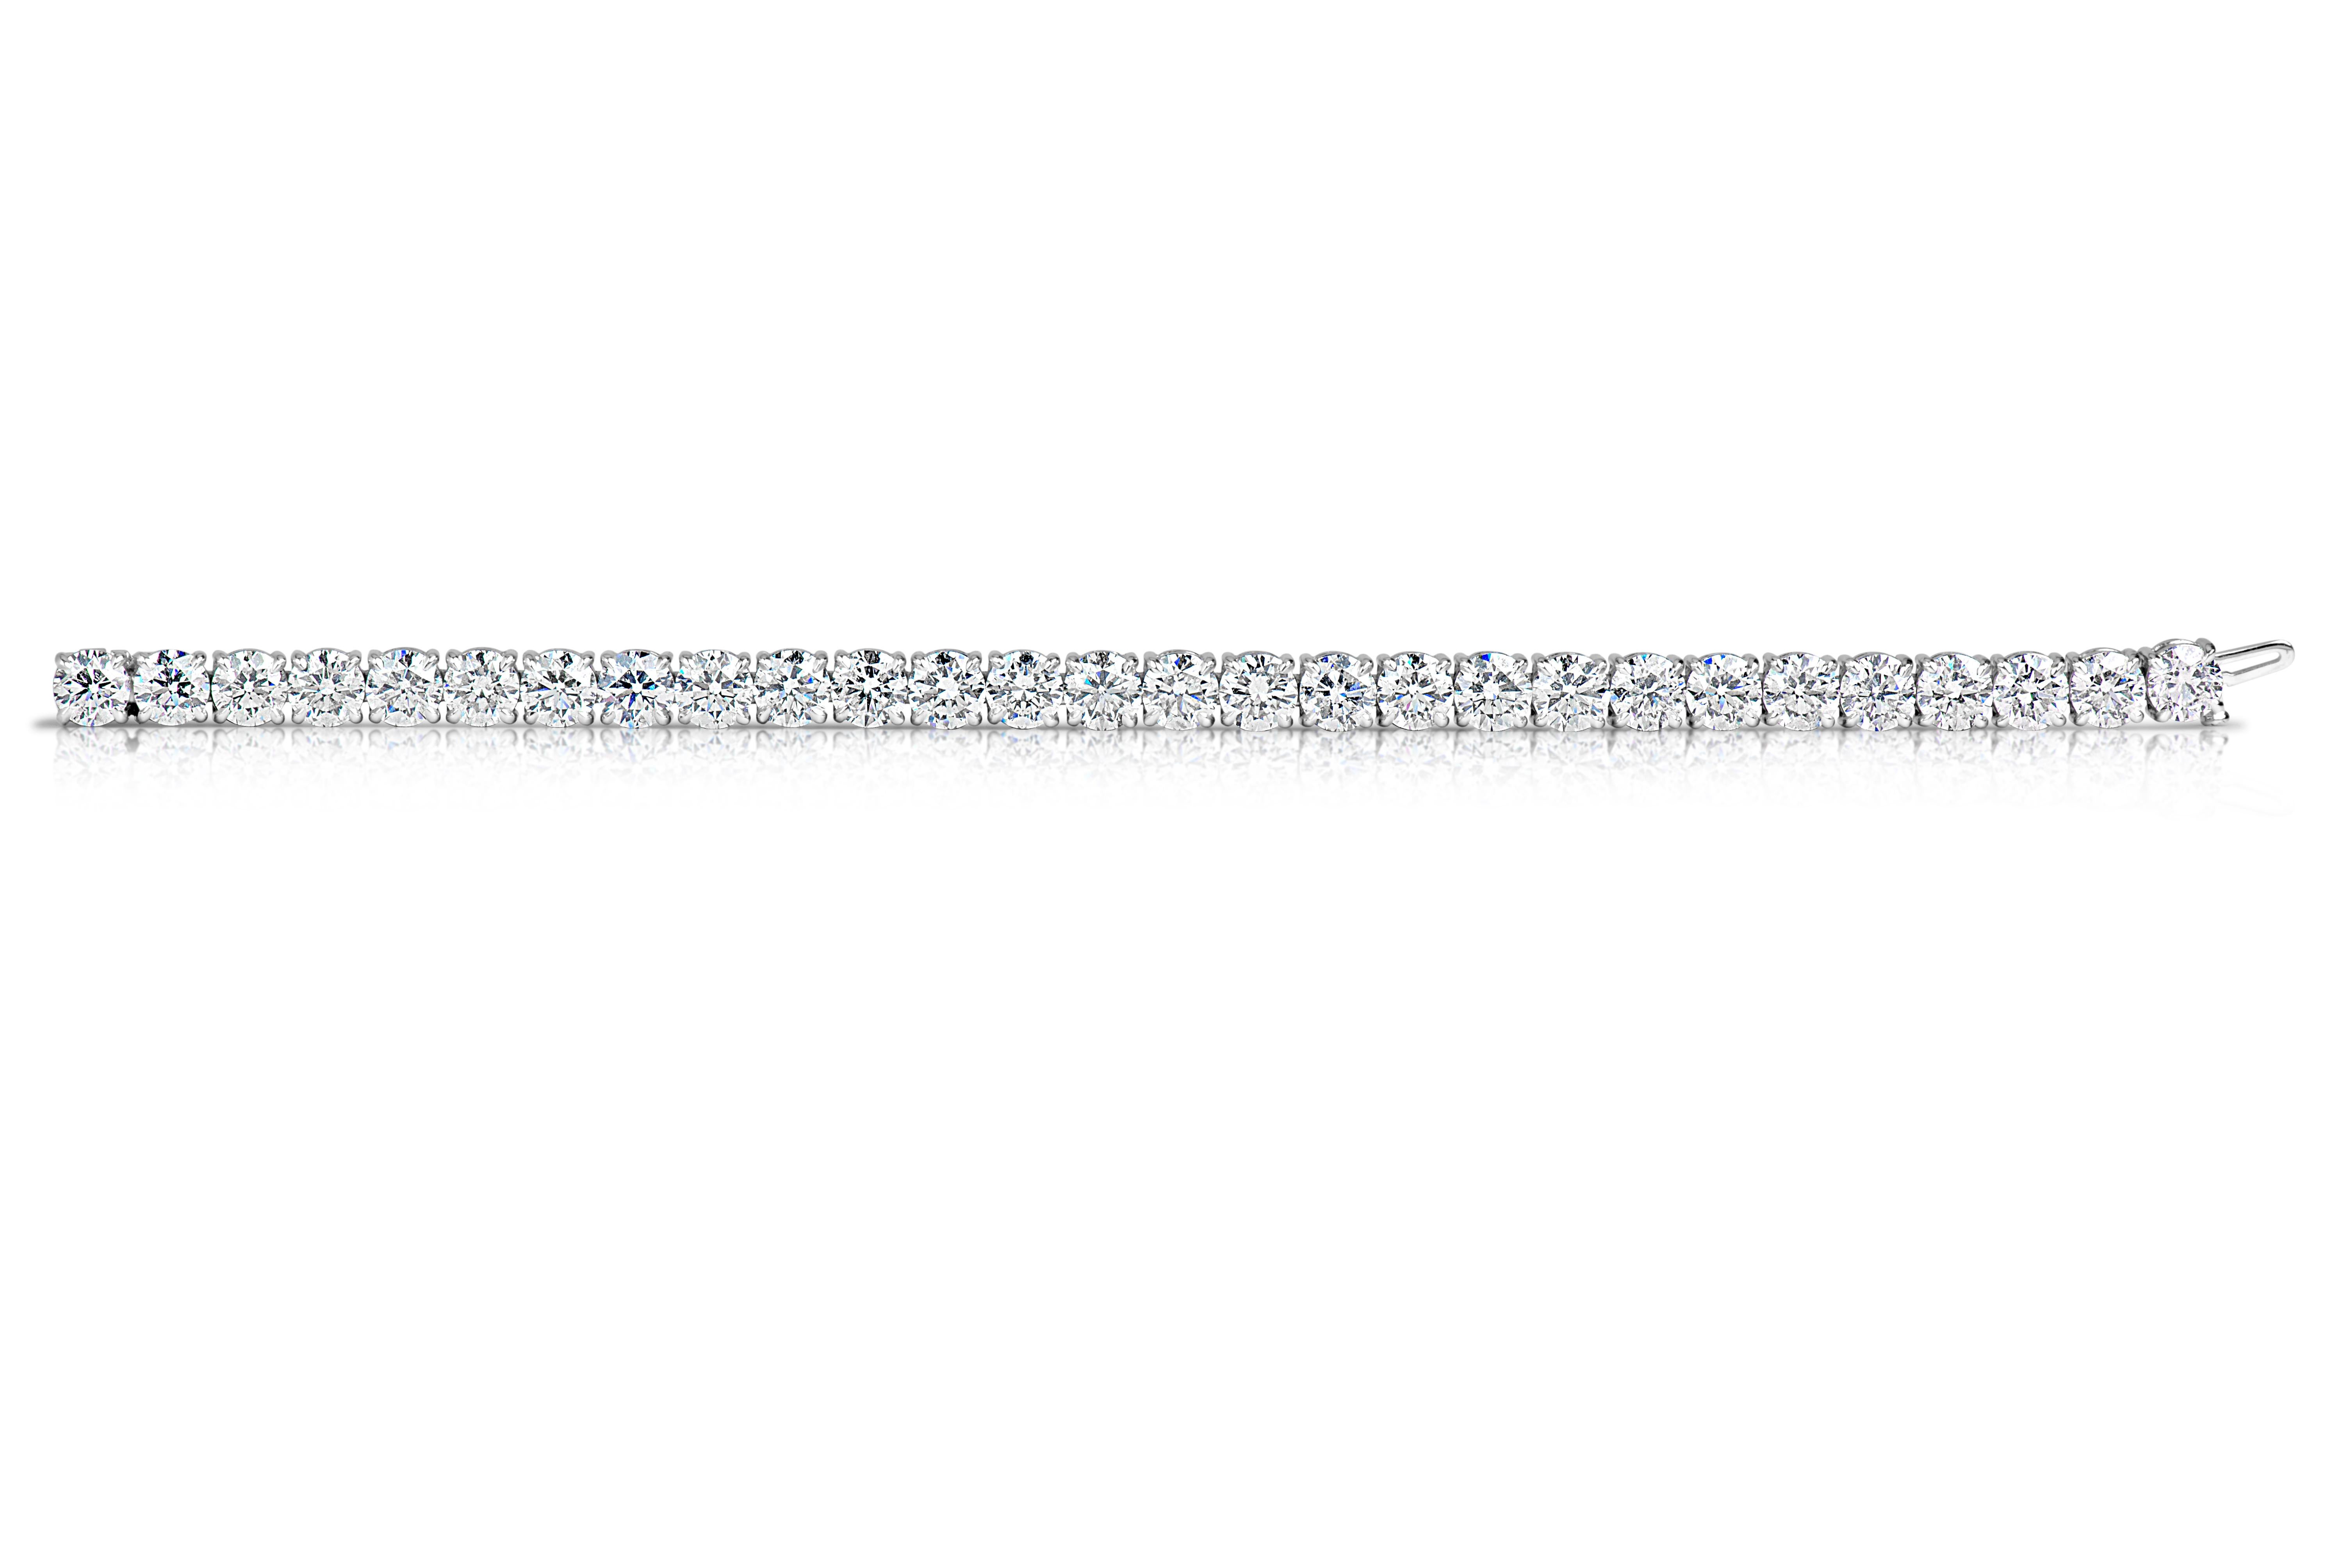 14 carat tennis bracelet